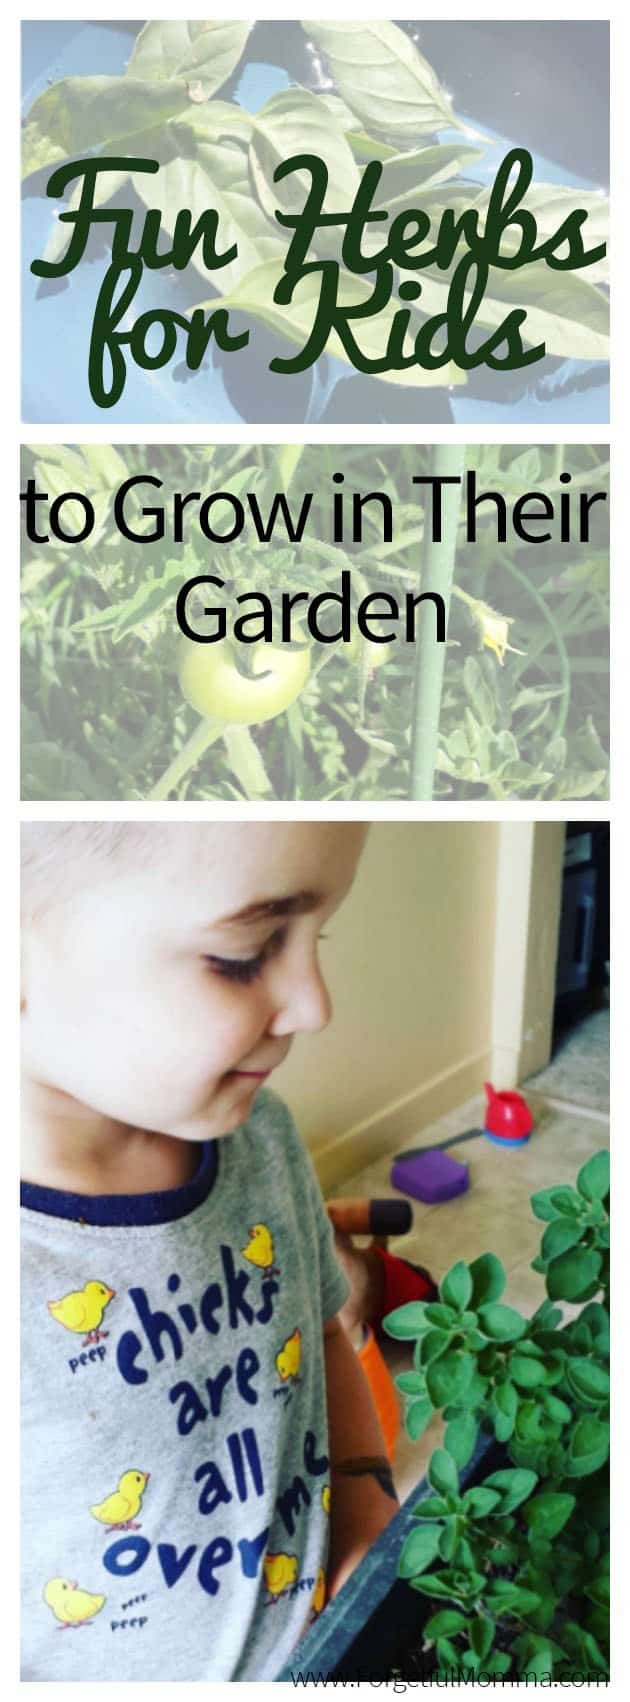 Fun Herbs for Kids to Grow in Their Garden